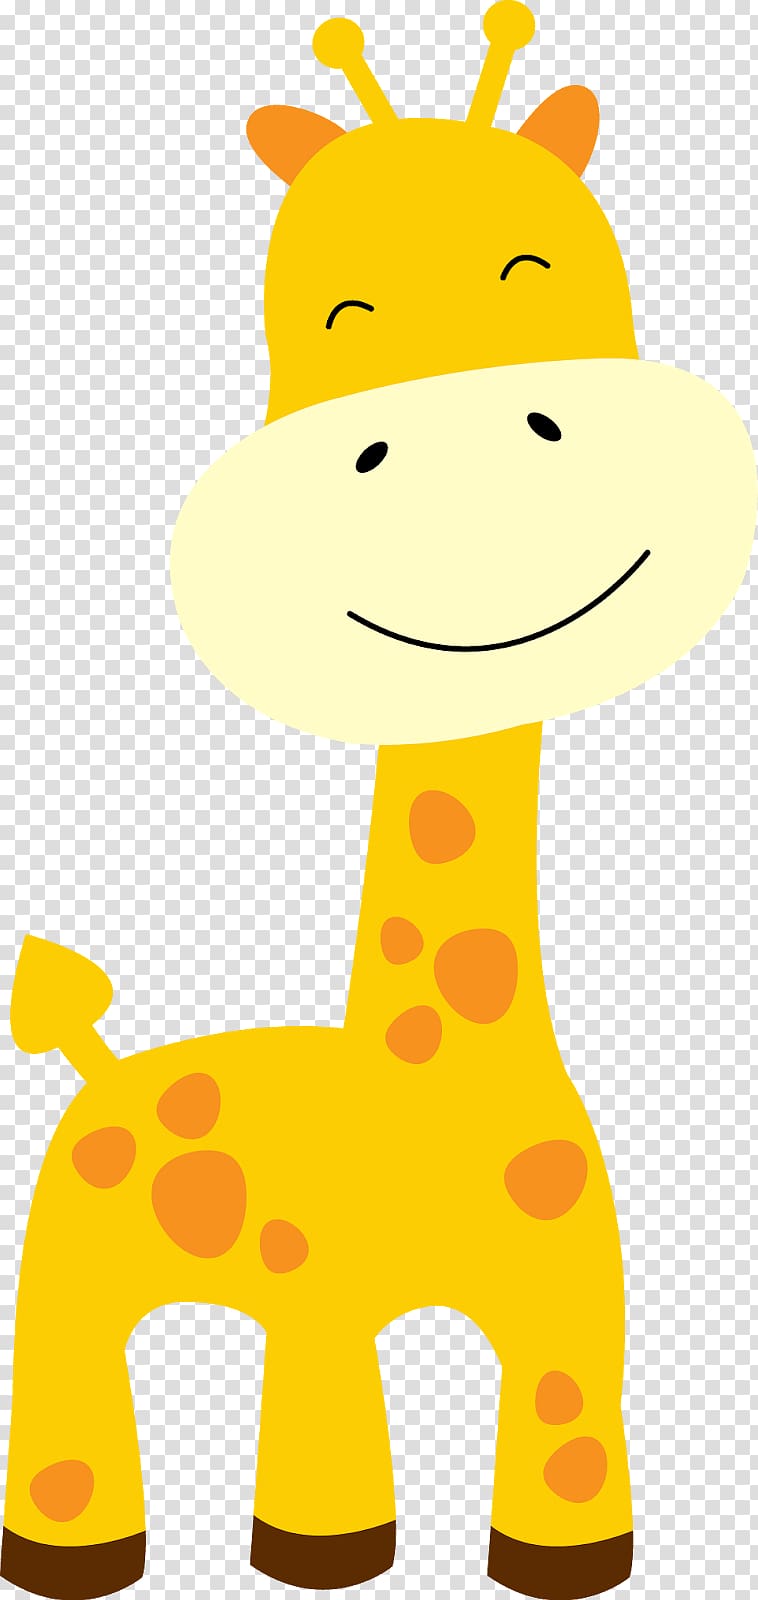 Giraffe baby giraffes.